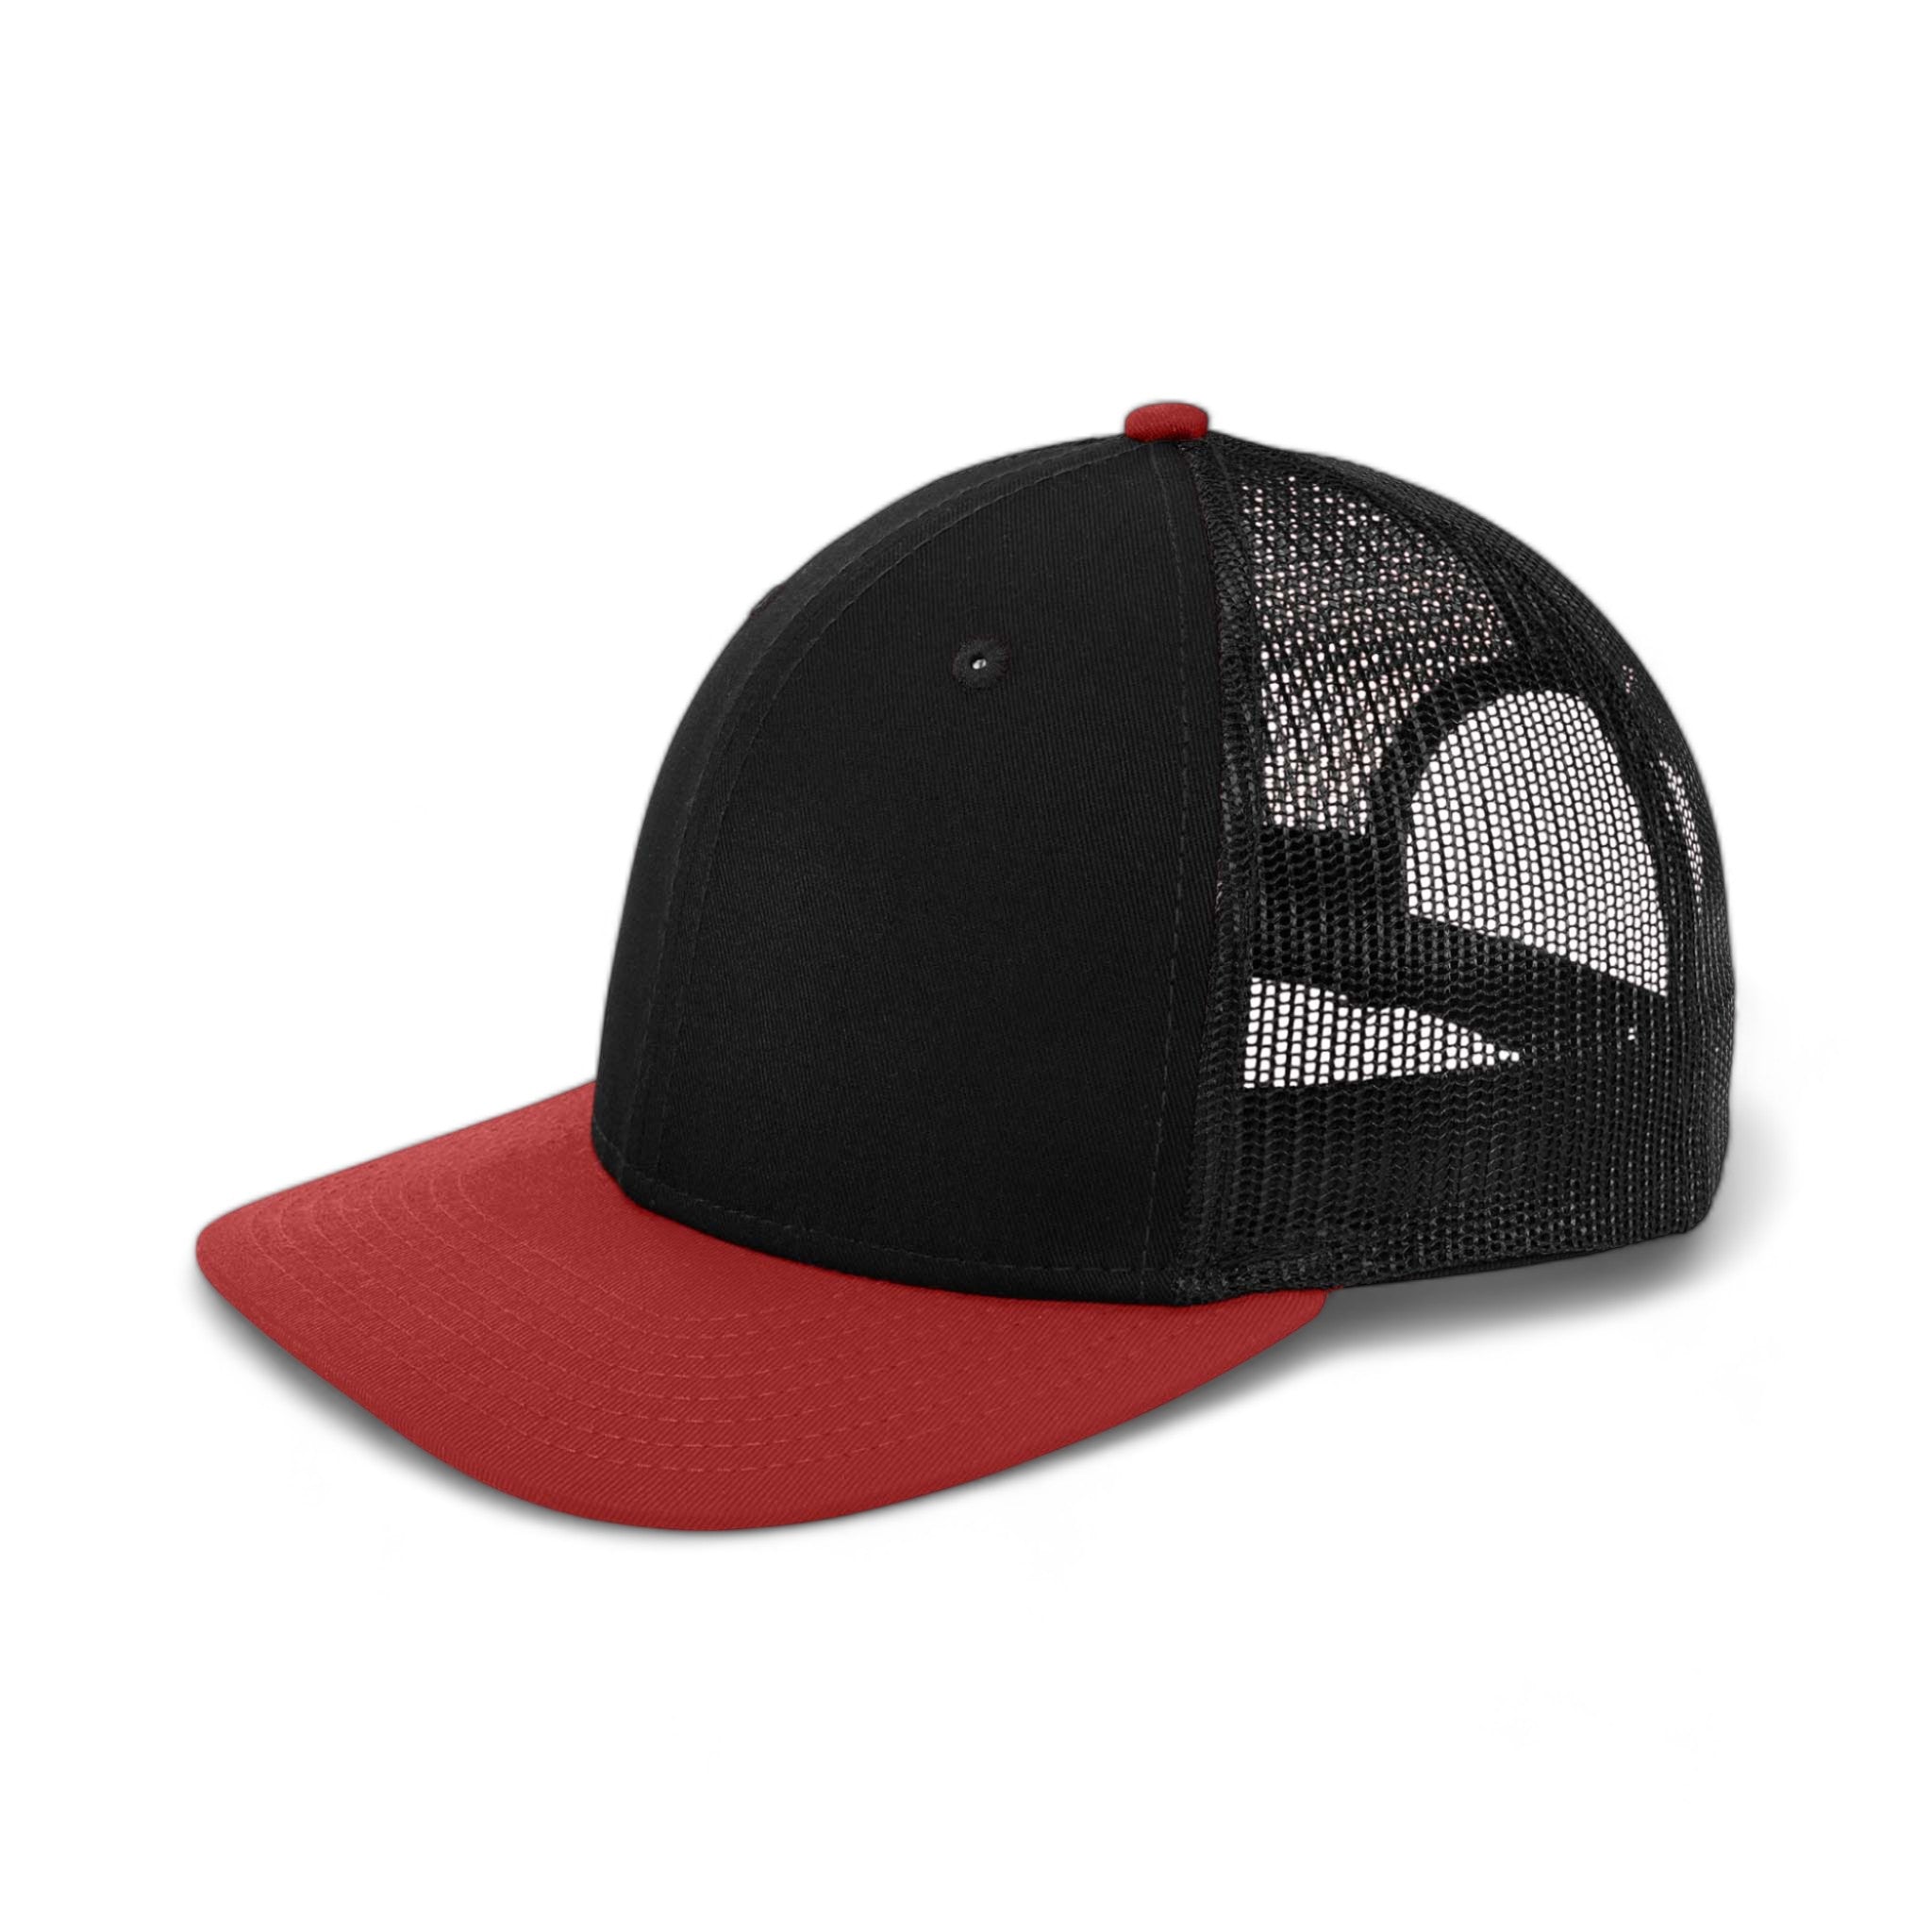 Side view of New Era NE207 custom hat in black and scarlet